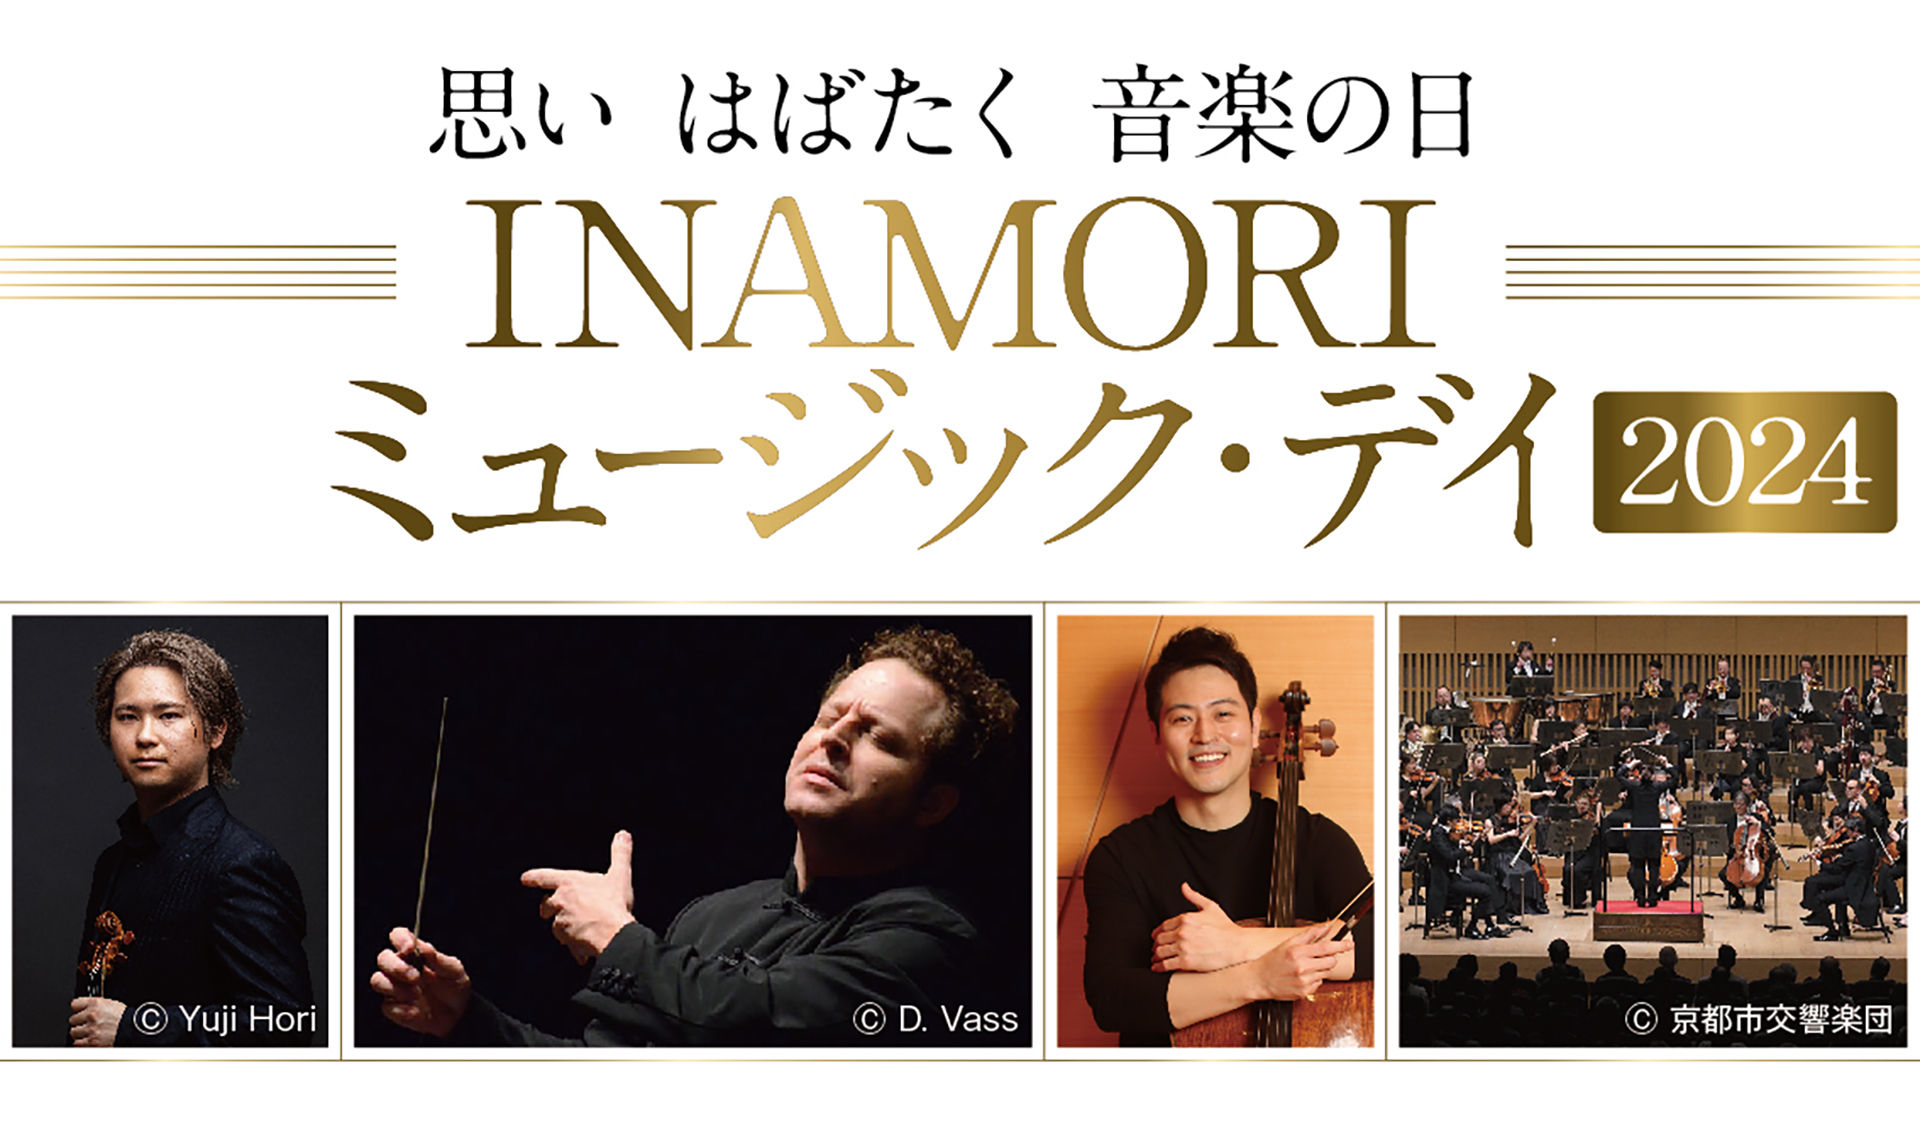 「INAMORI ミュージック・デイ2024」
8月から11月にかけて京都府内で開催